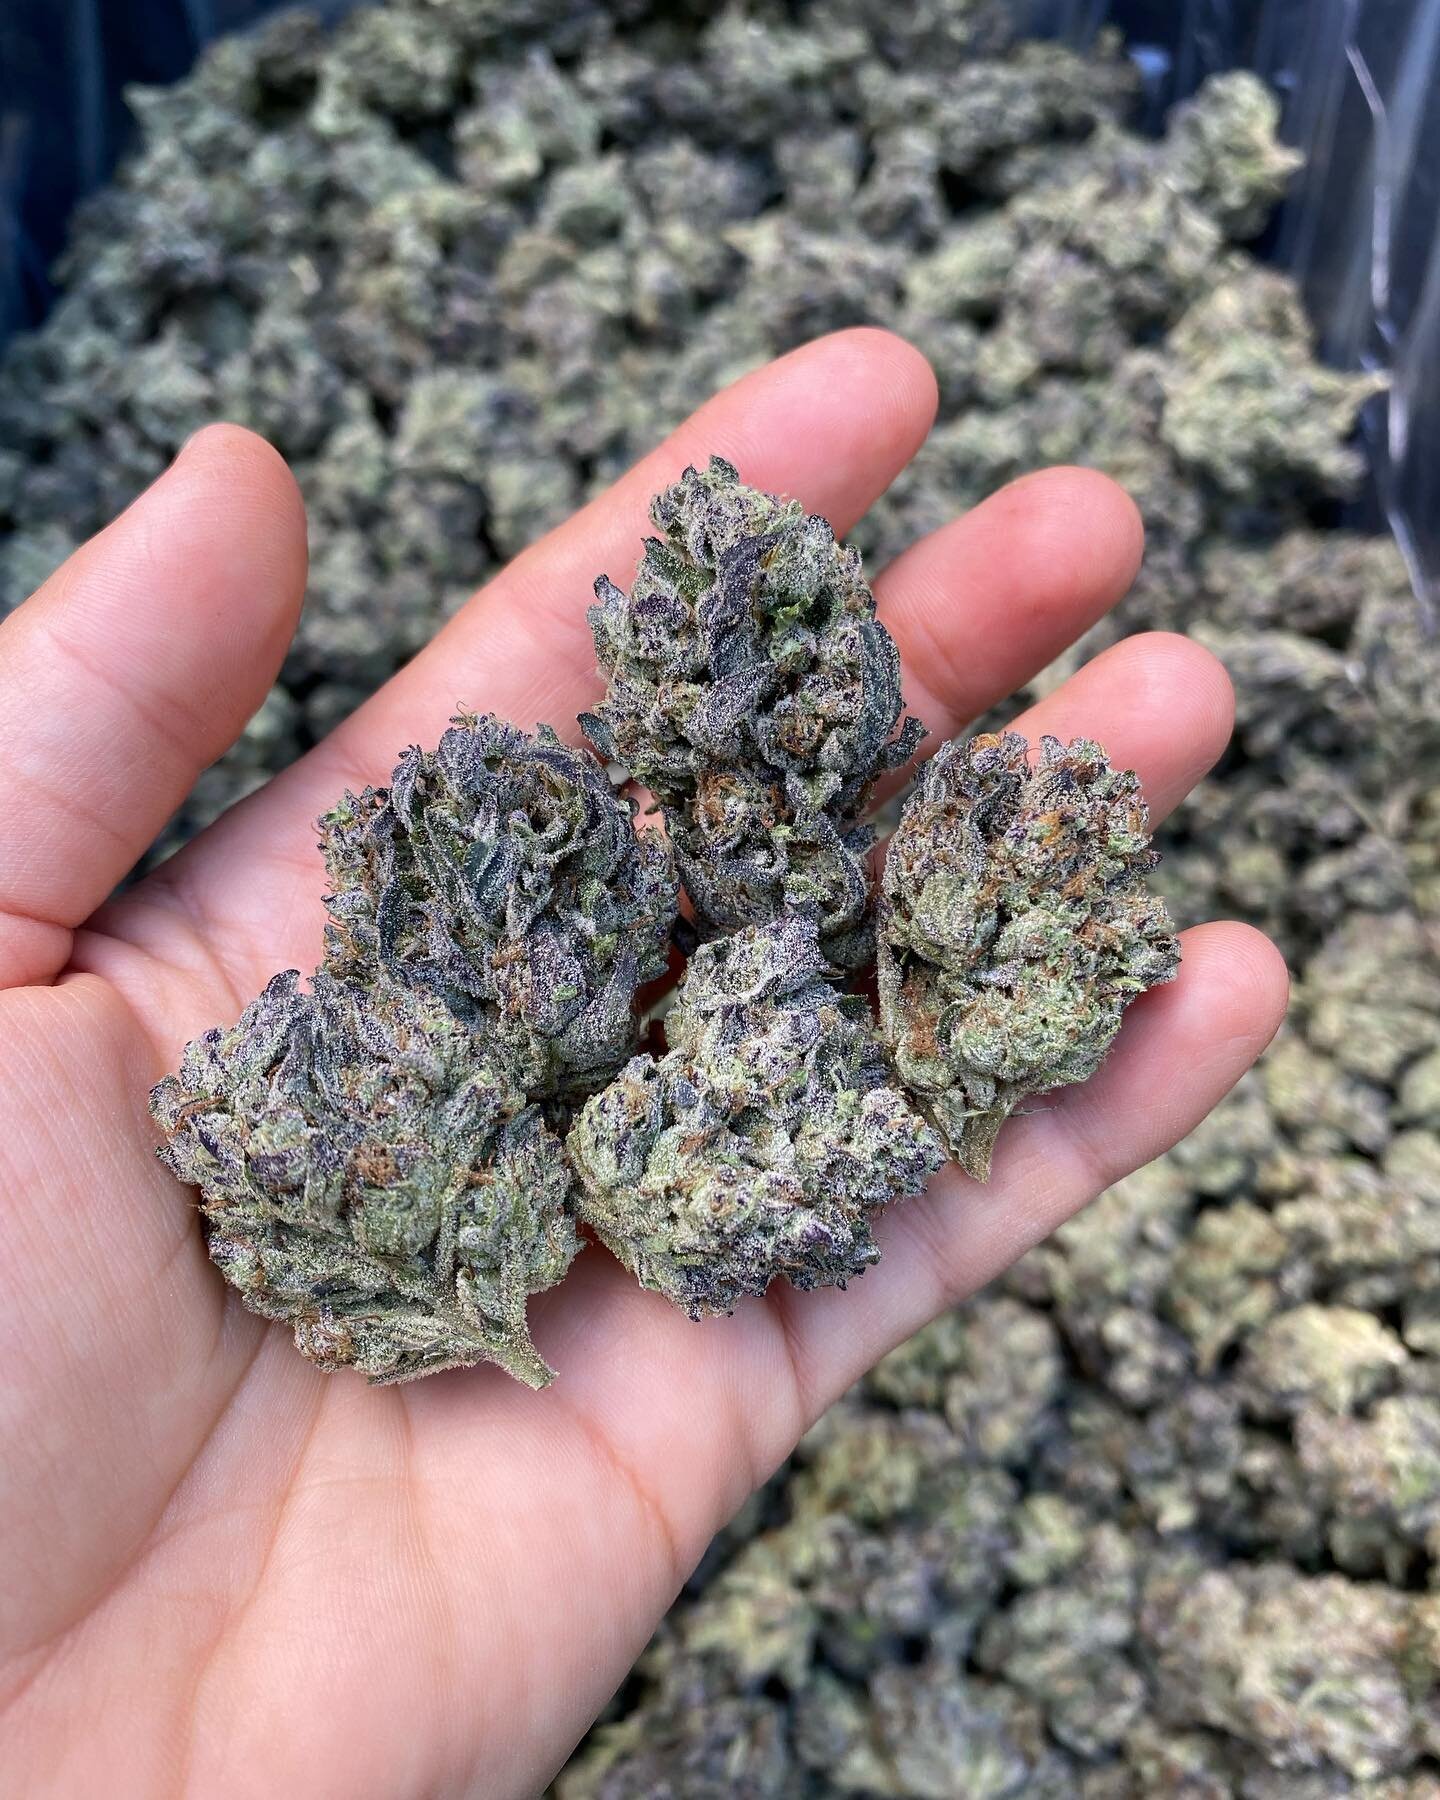 Gush mints coming soon to FarmCut! 🔥 
Swipe &mdash;&mdash;&gt; to see the flowers on harvest day.
(Nothing for sale here!!)
&bull;
&bull;
#sungrown
#lightdep 
#gushmints 
#purpleweed
#indica 
#farmfresh 
#regenerativecannabis 
#organicallygrown 
#li